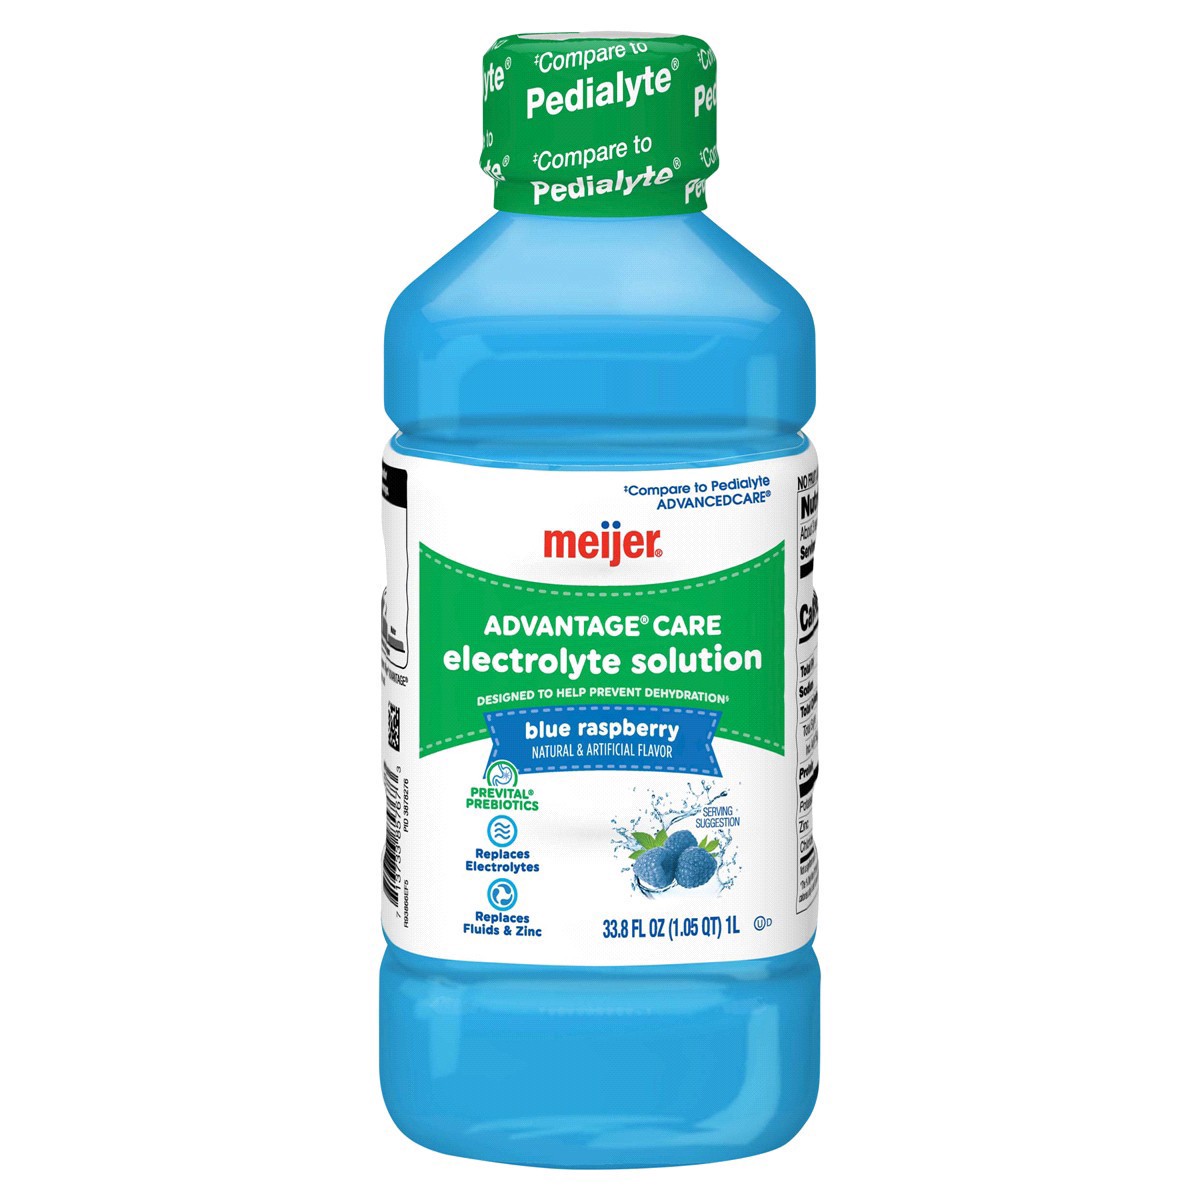 slide 1 of 25, Meijer Advantage Care Electrolyte Solution, Blue Raspberry, With Prevital Prebiotics, 1 liter